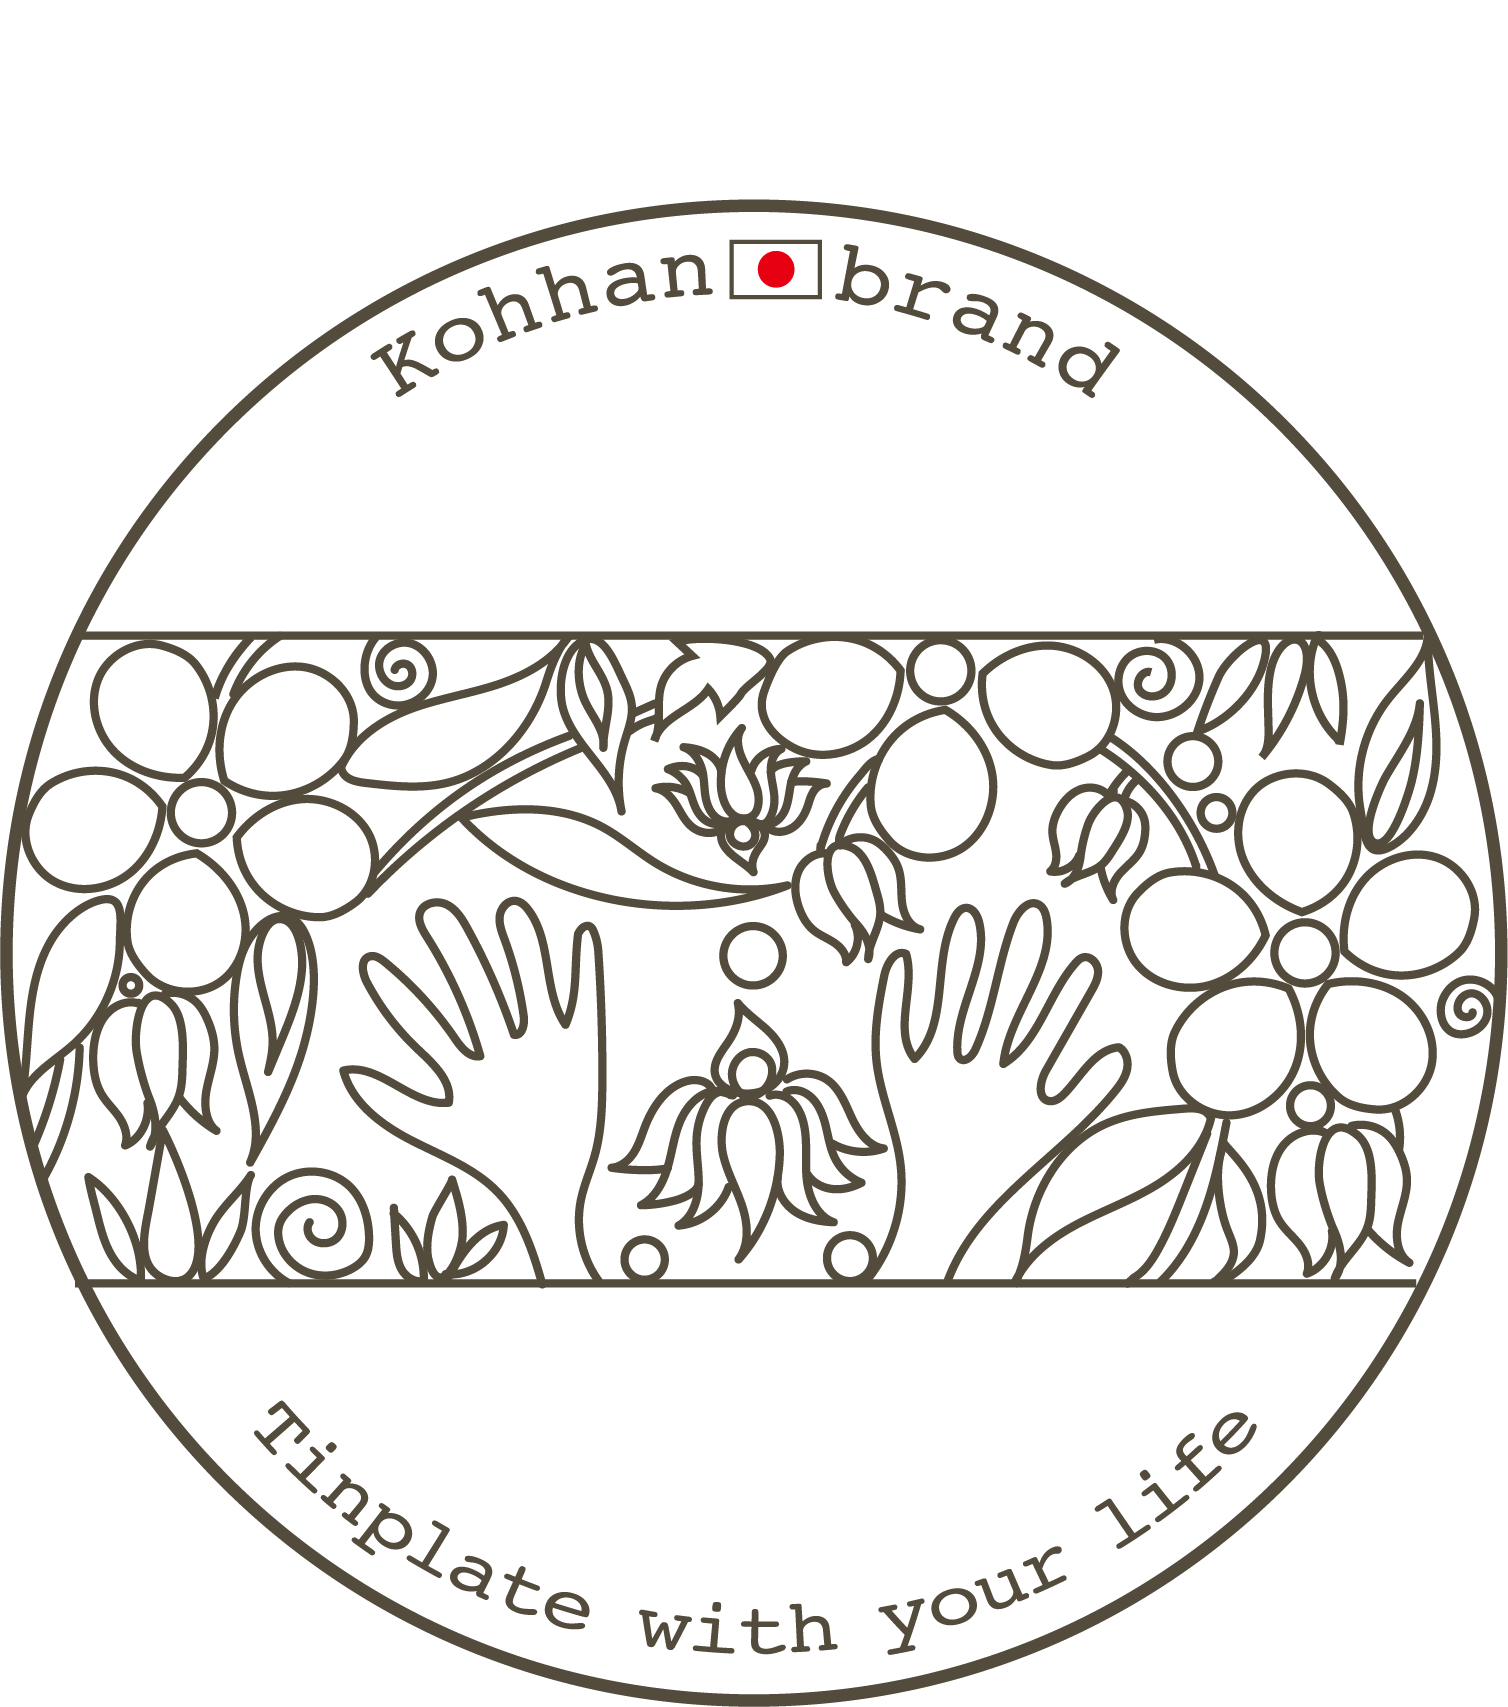 Kohhan_brand